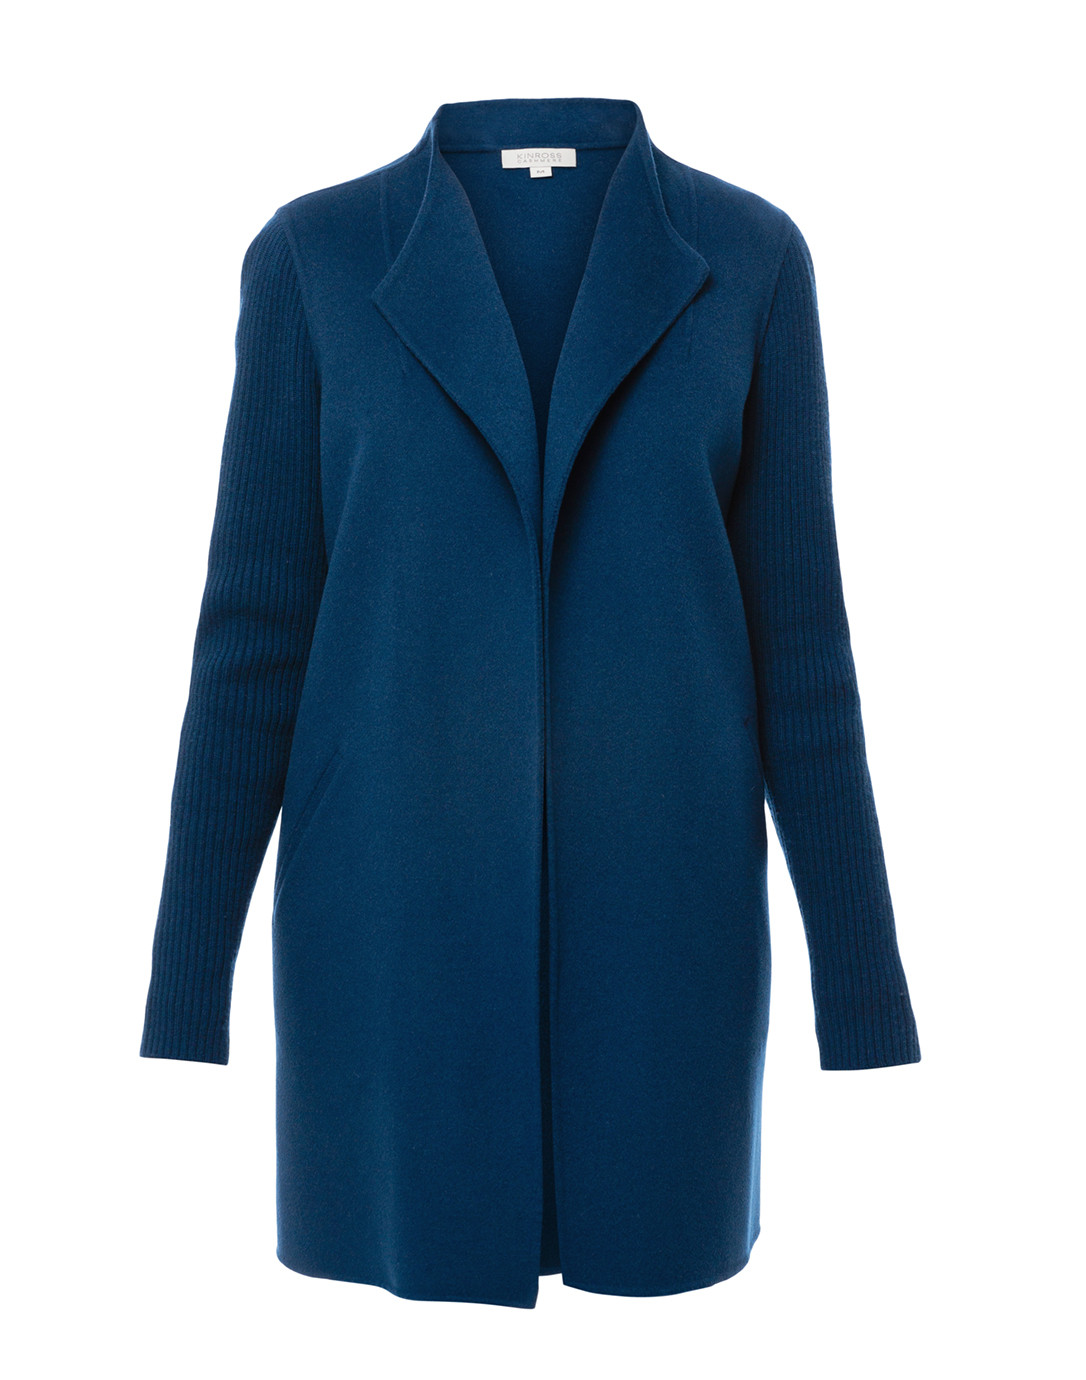 Winter Teal Blue Wool Cashmere Coat | Kinross | Halsbrook